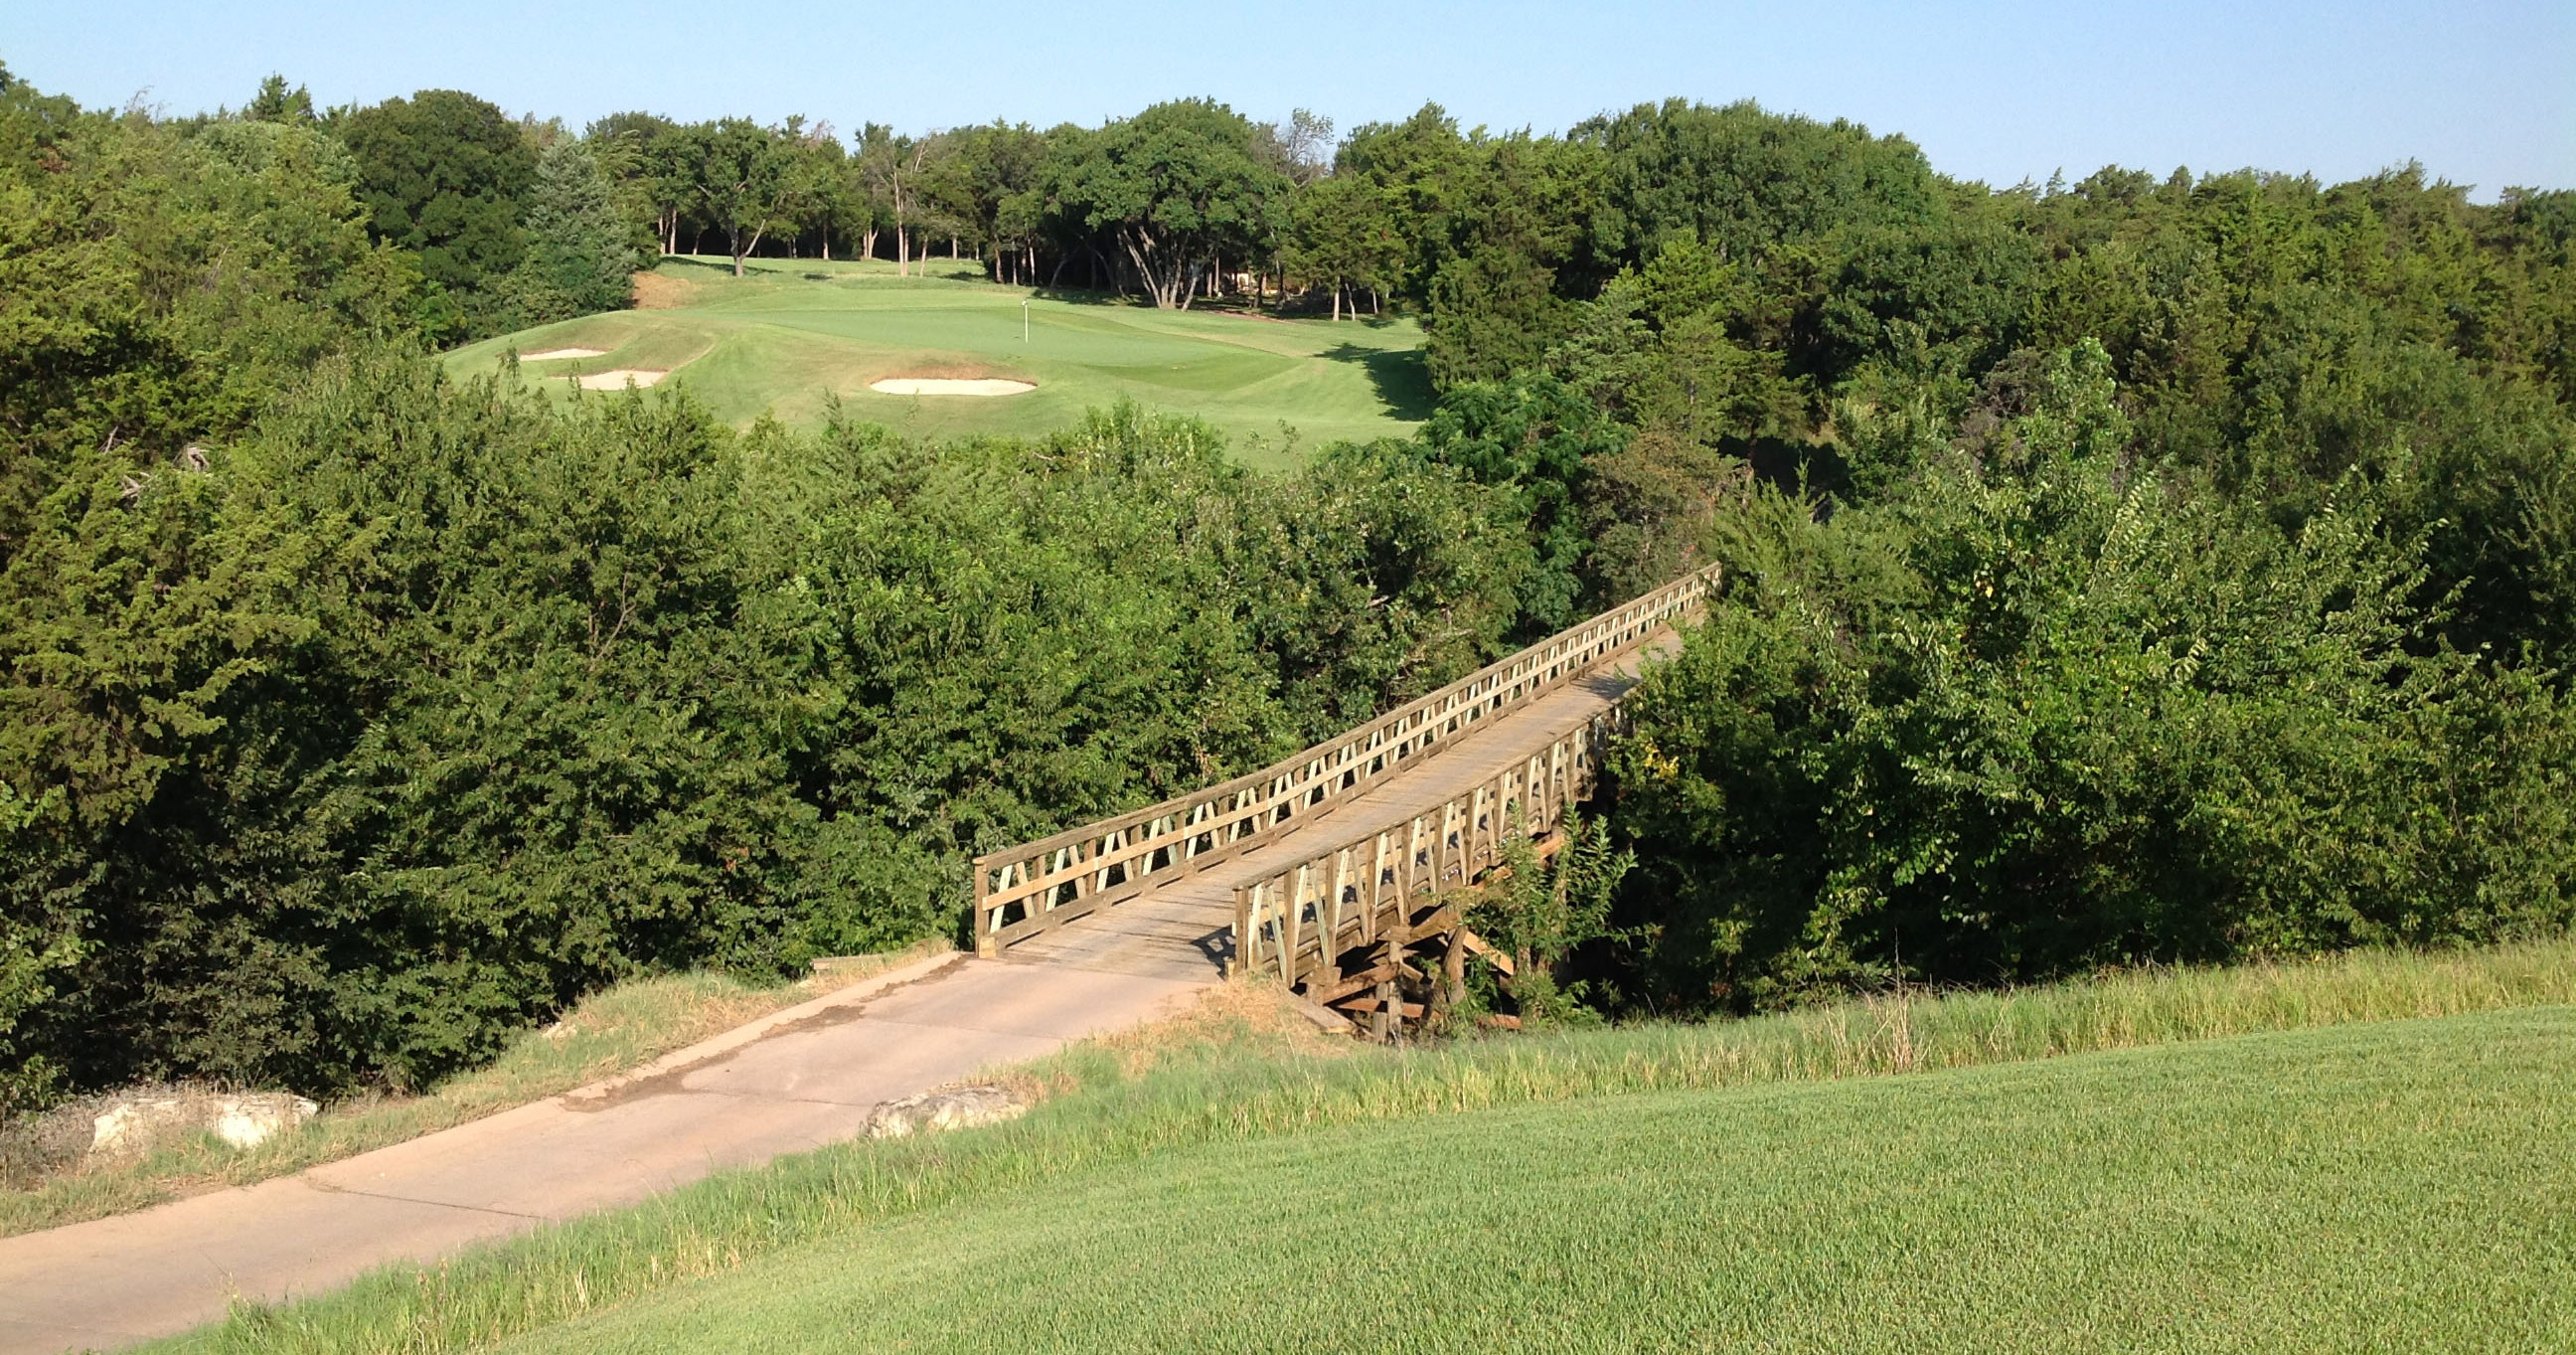 Golf Cart, Golf Course and Community Bridges